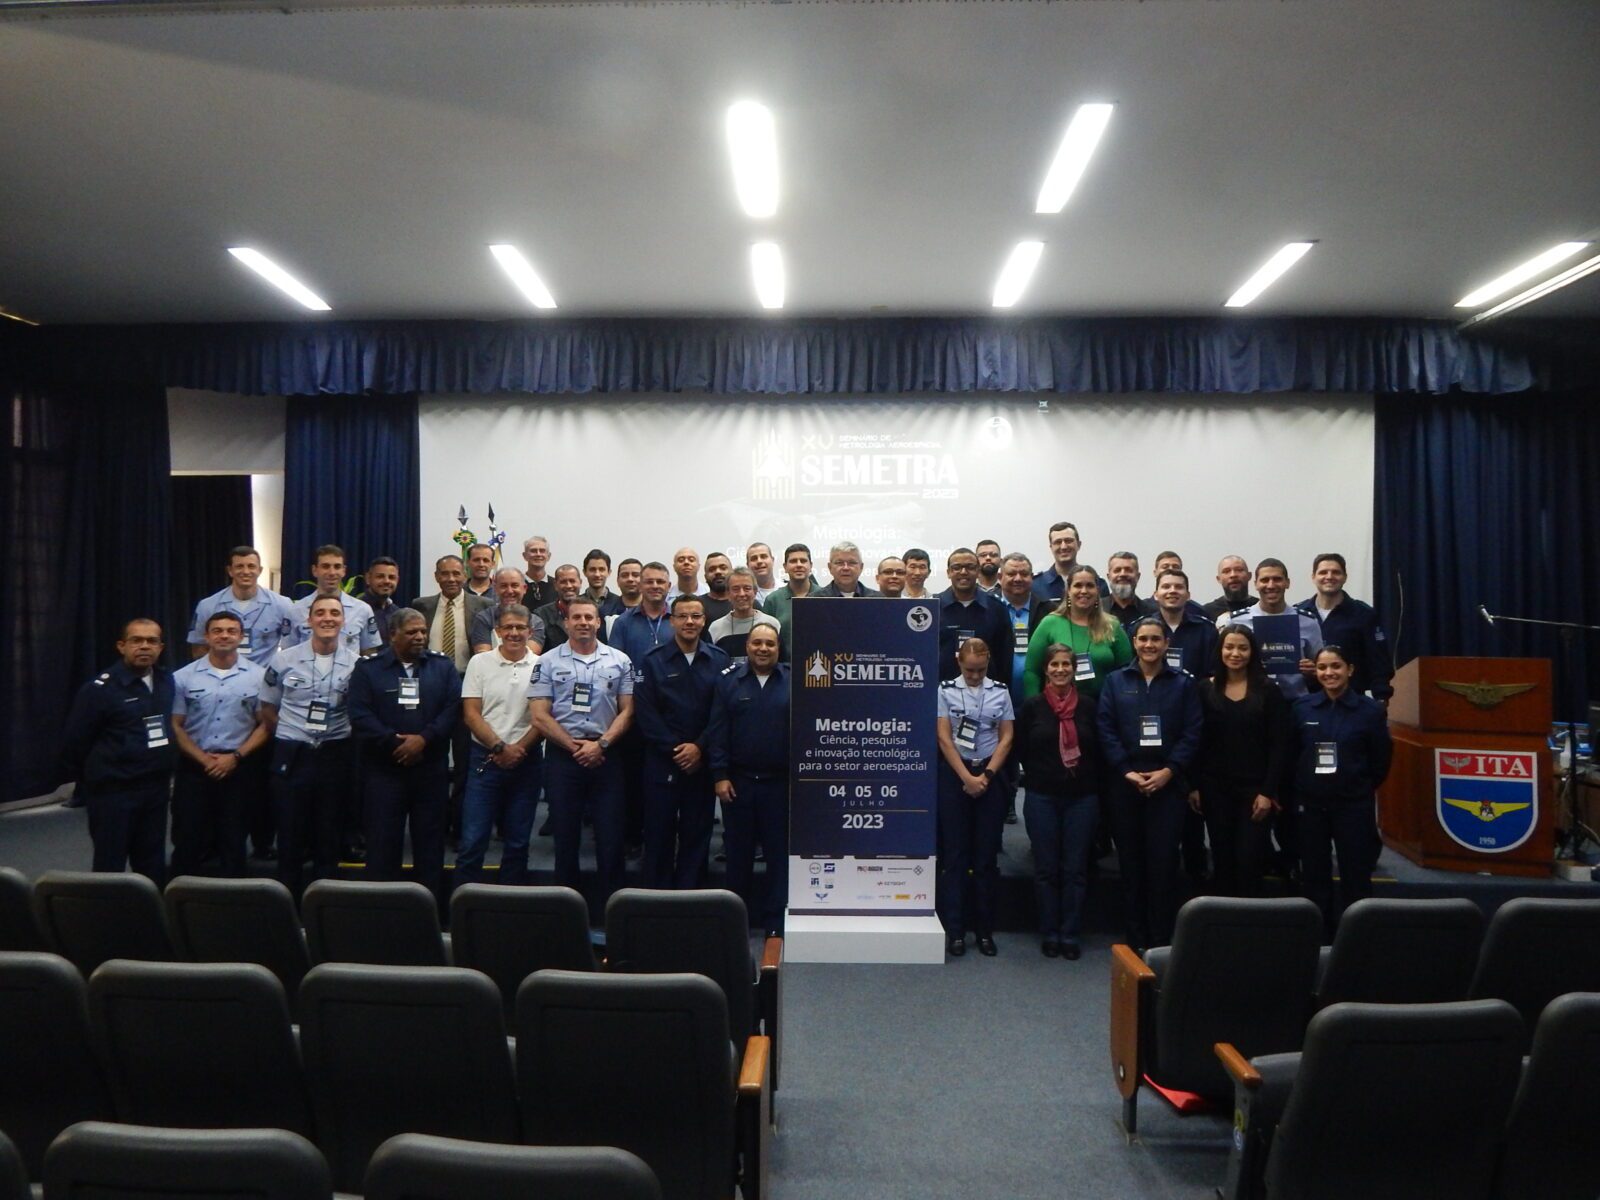 IFI promotes XV Seminar on Aerospace Metrology